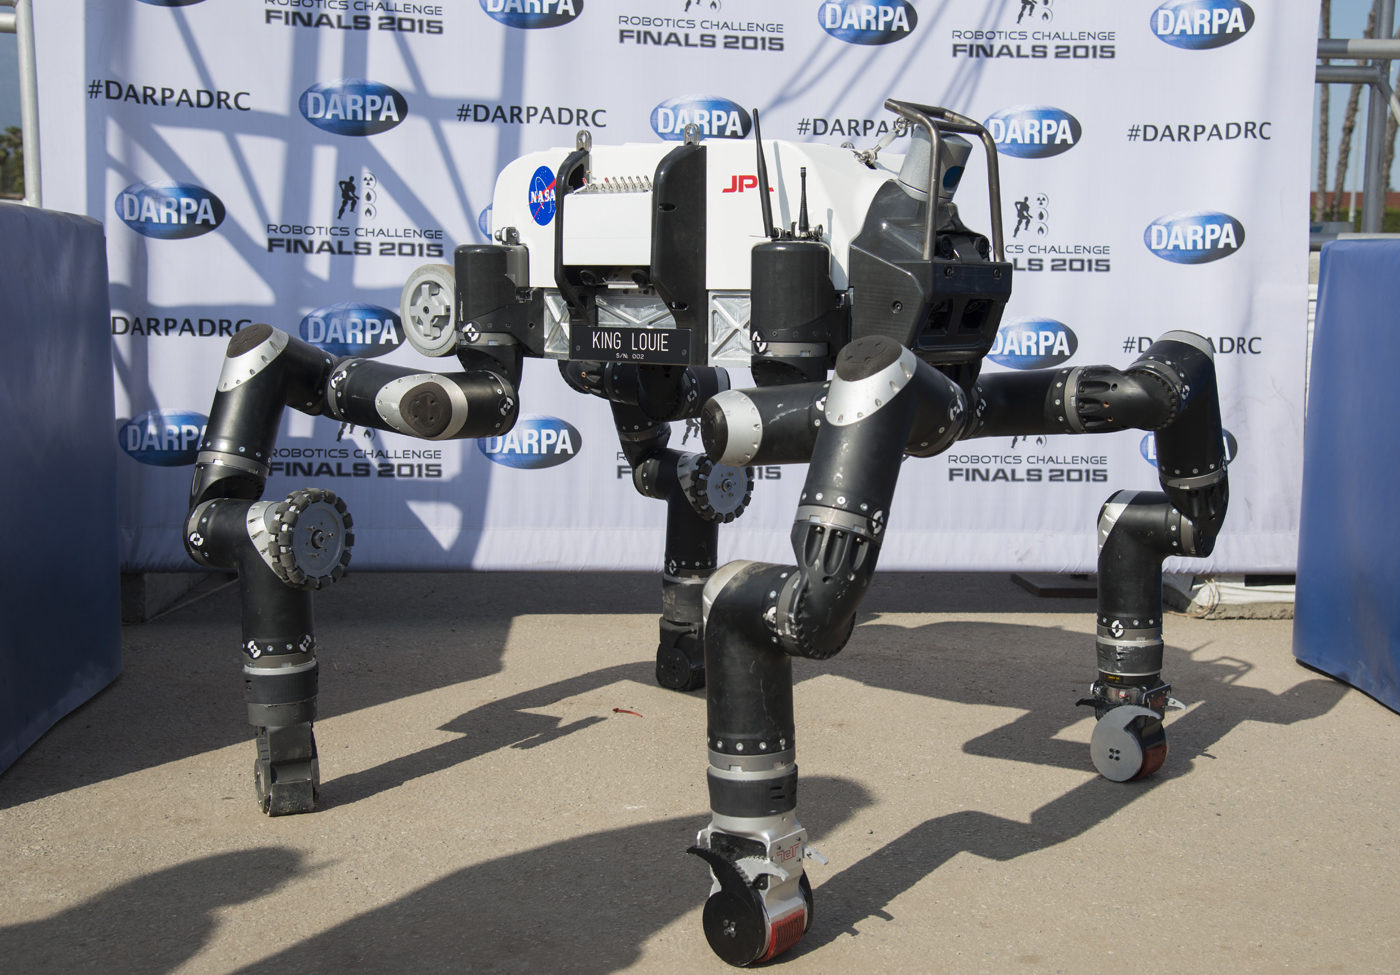 J.Krohn's photo of JPL's RoboSimian at the DARPA Robotics Challenge Finals in 2015, courtesy of JPL-Caltech.